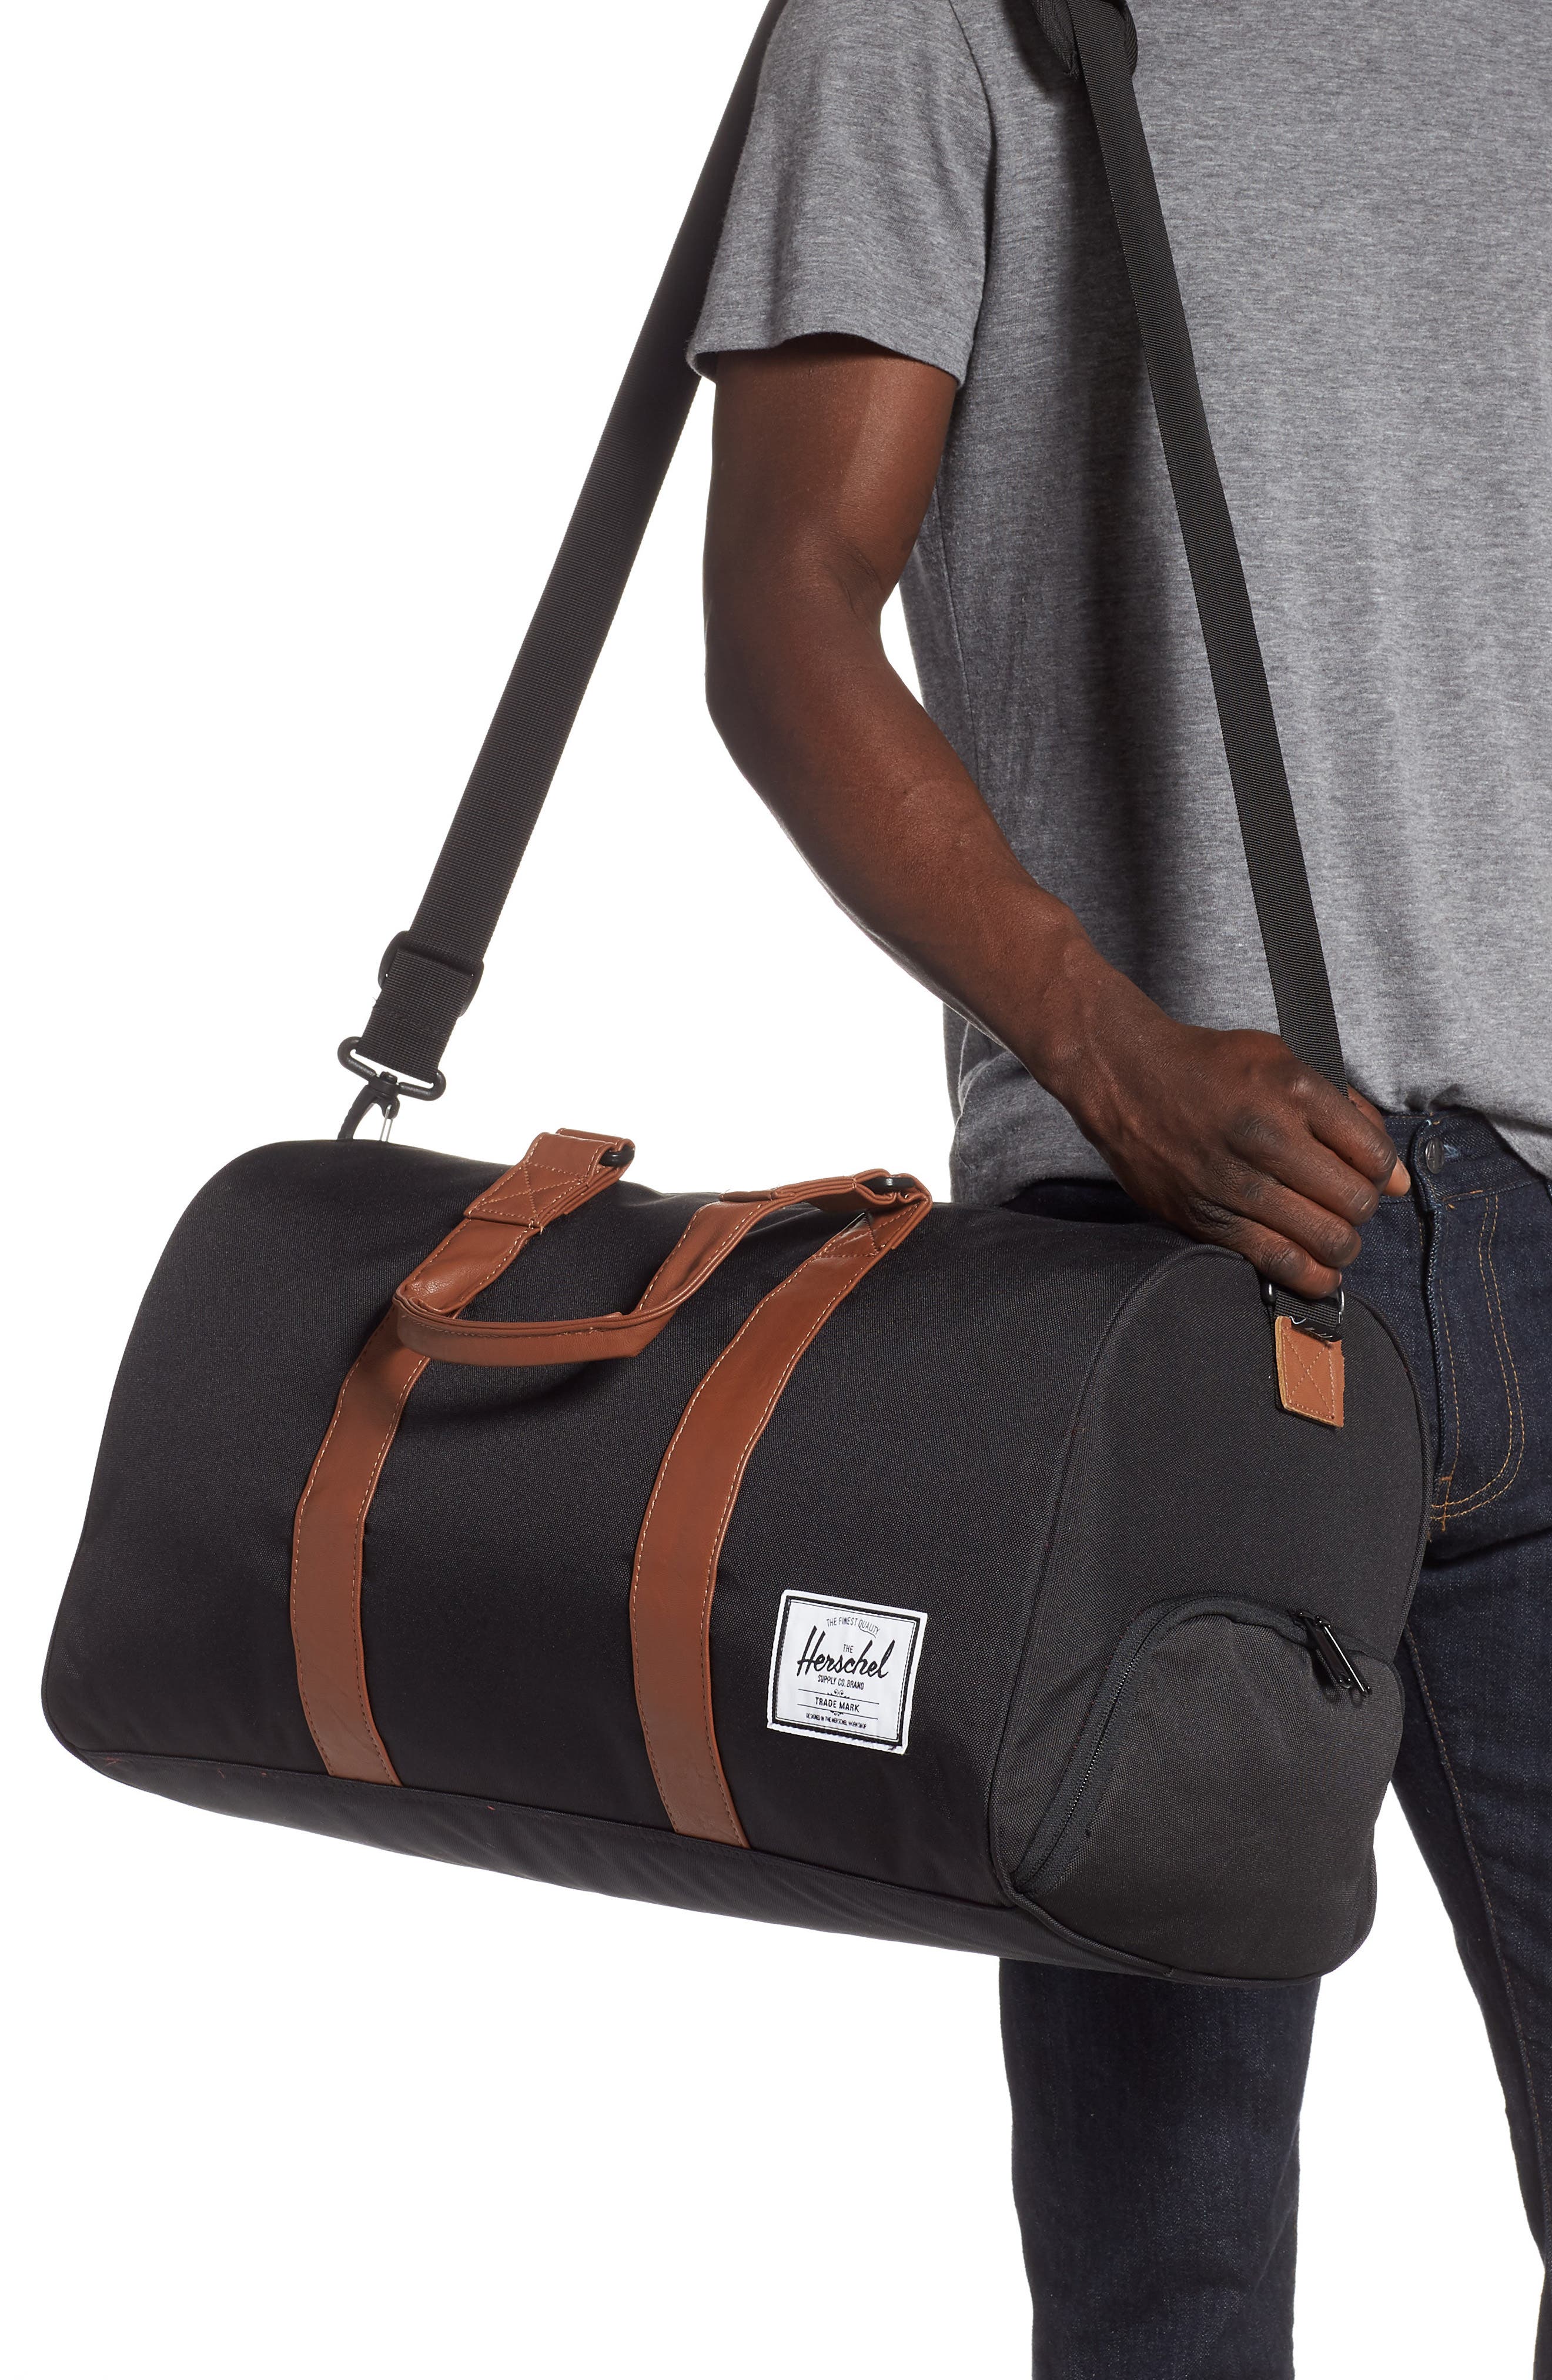 Mens Bags Gym bags and sports bags Black Herschel Novel Duffle Bag in Black Crosshatch Black for Men Herschel Supply Co 